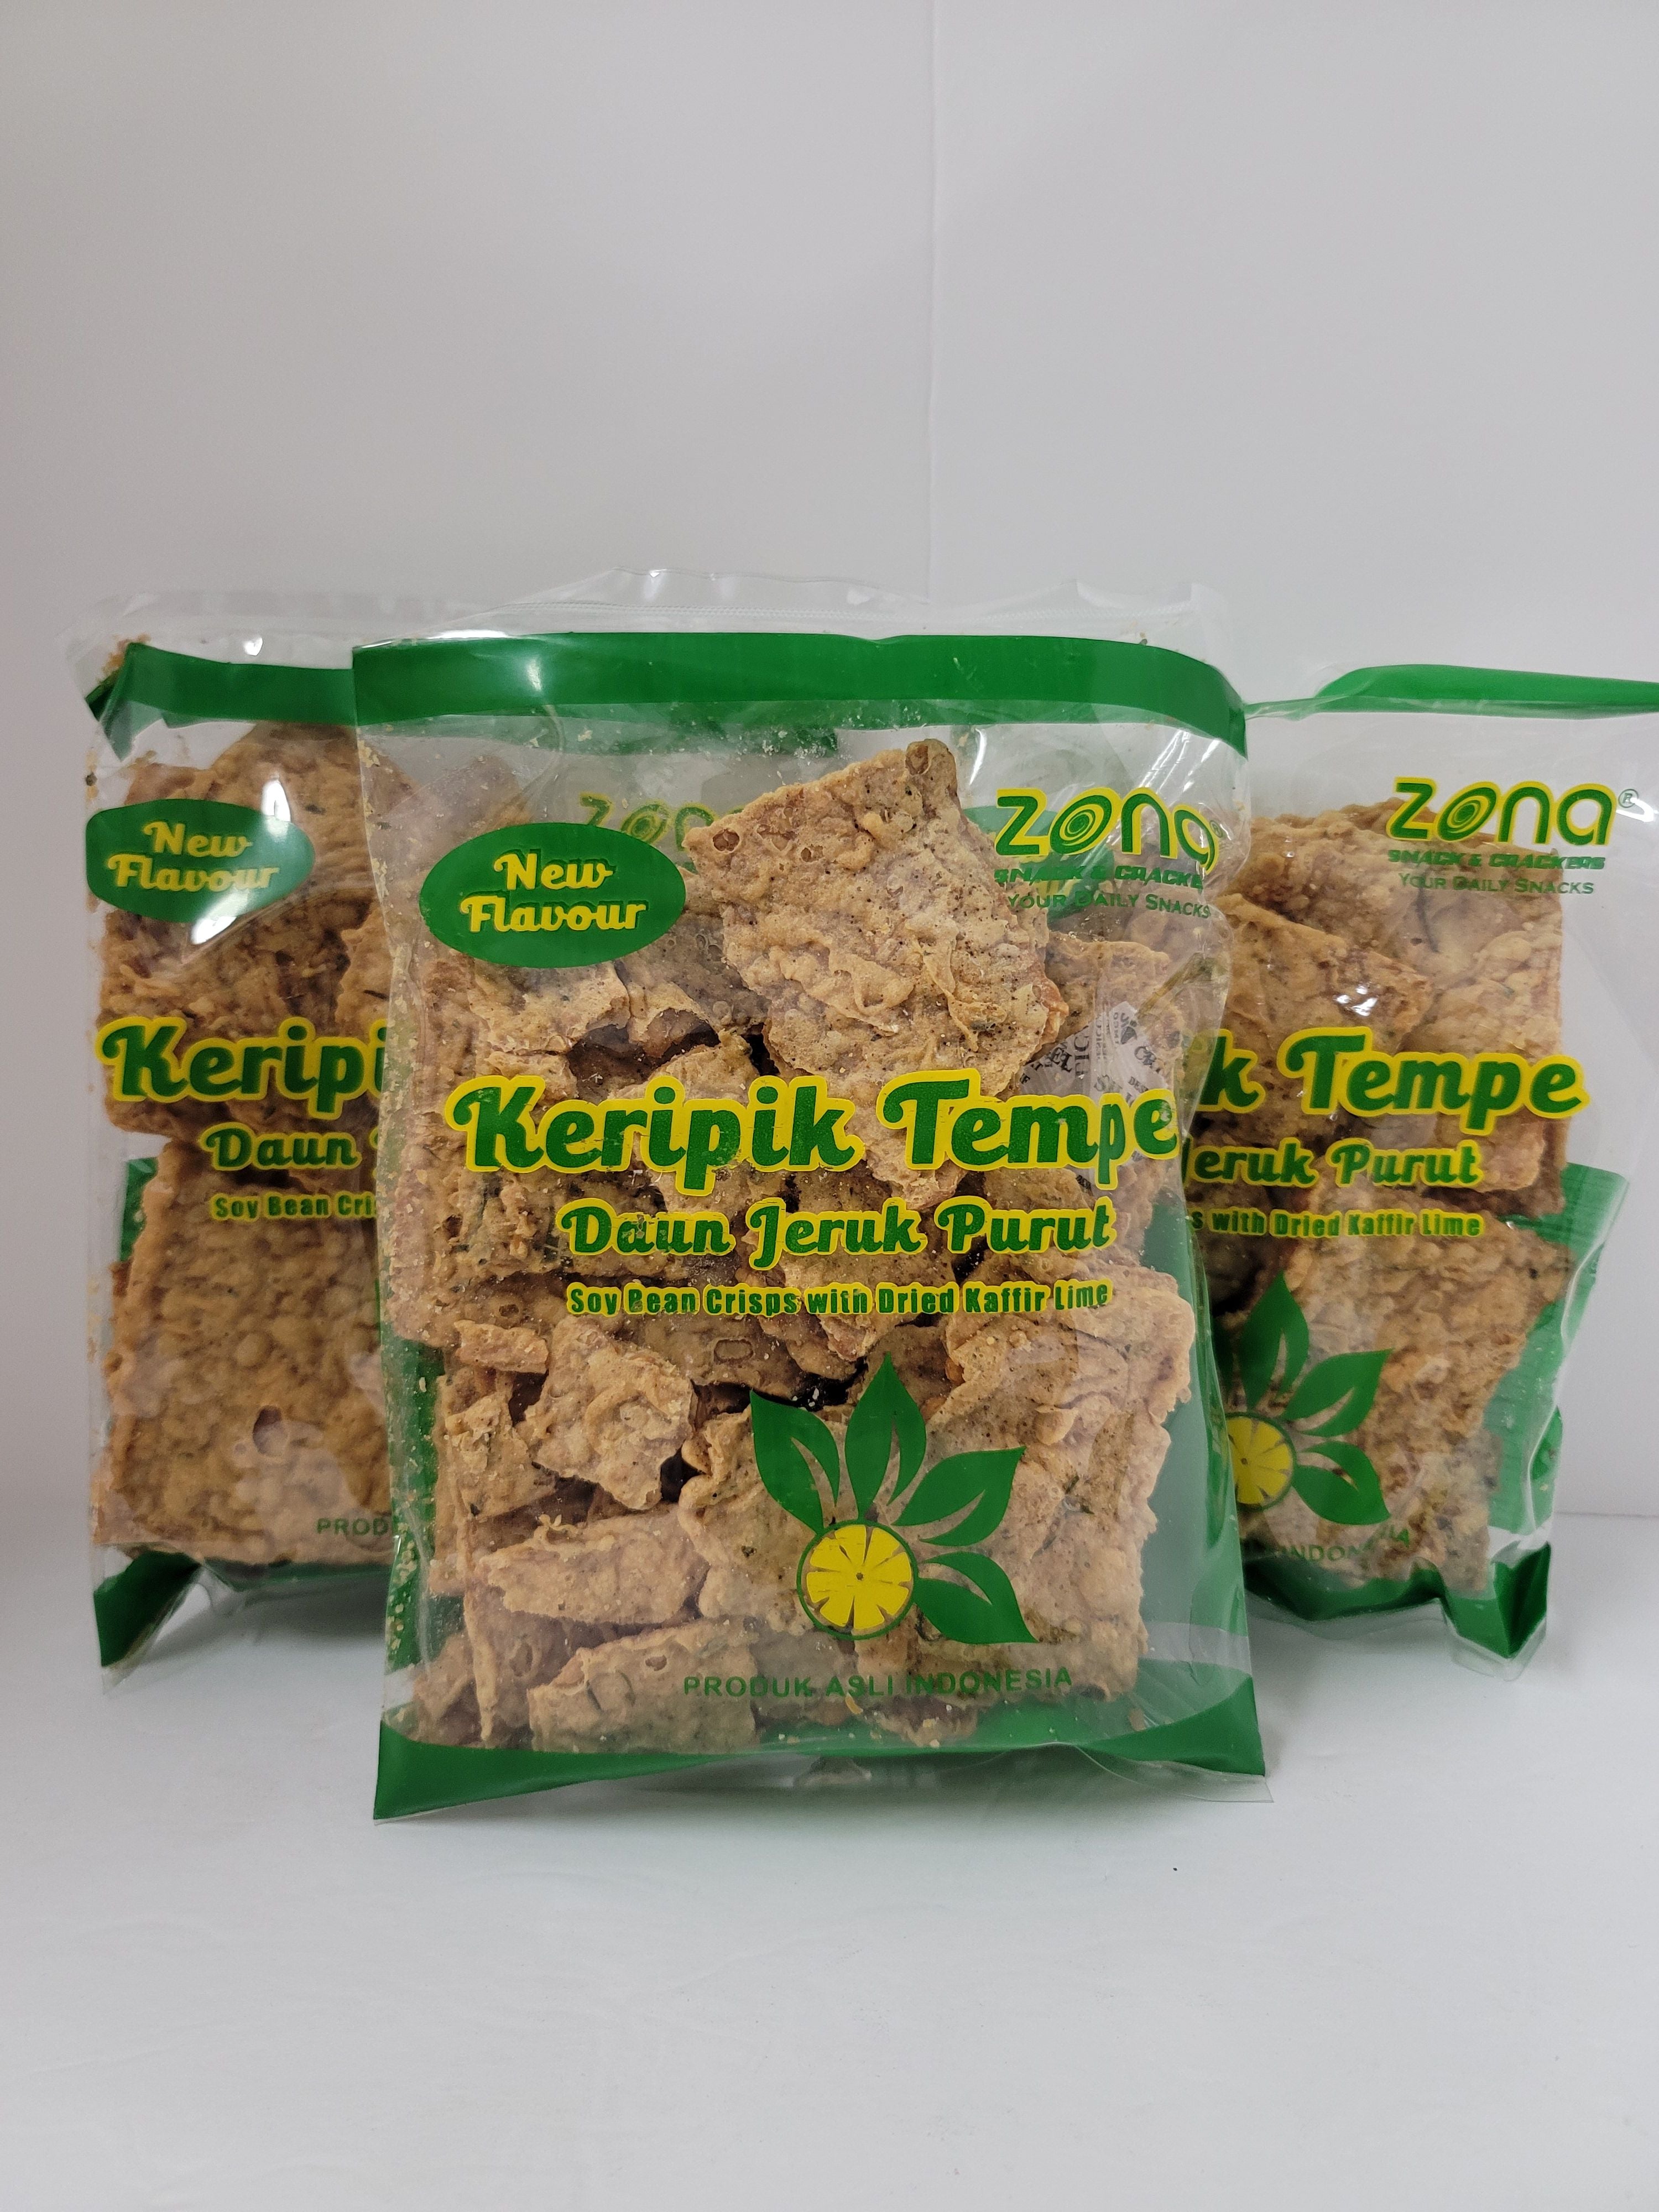 Zona Keripik Tempe Daun Jeruk Purut (Soy Bean Crisps with Dried Kaffir Lime)